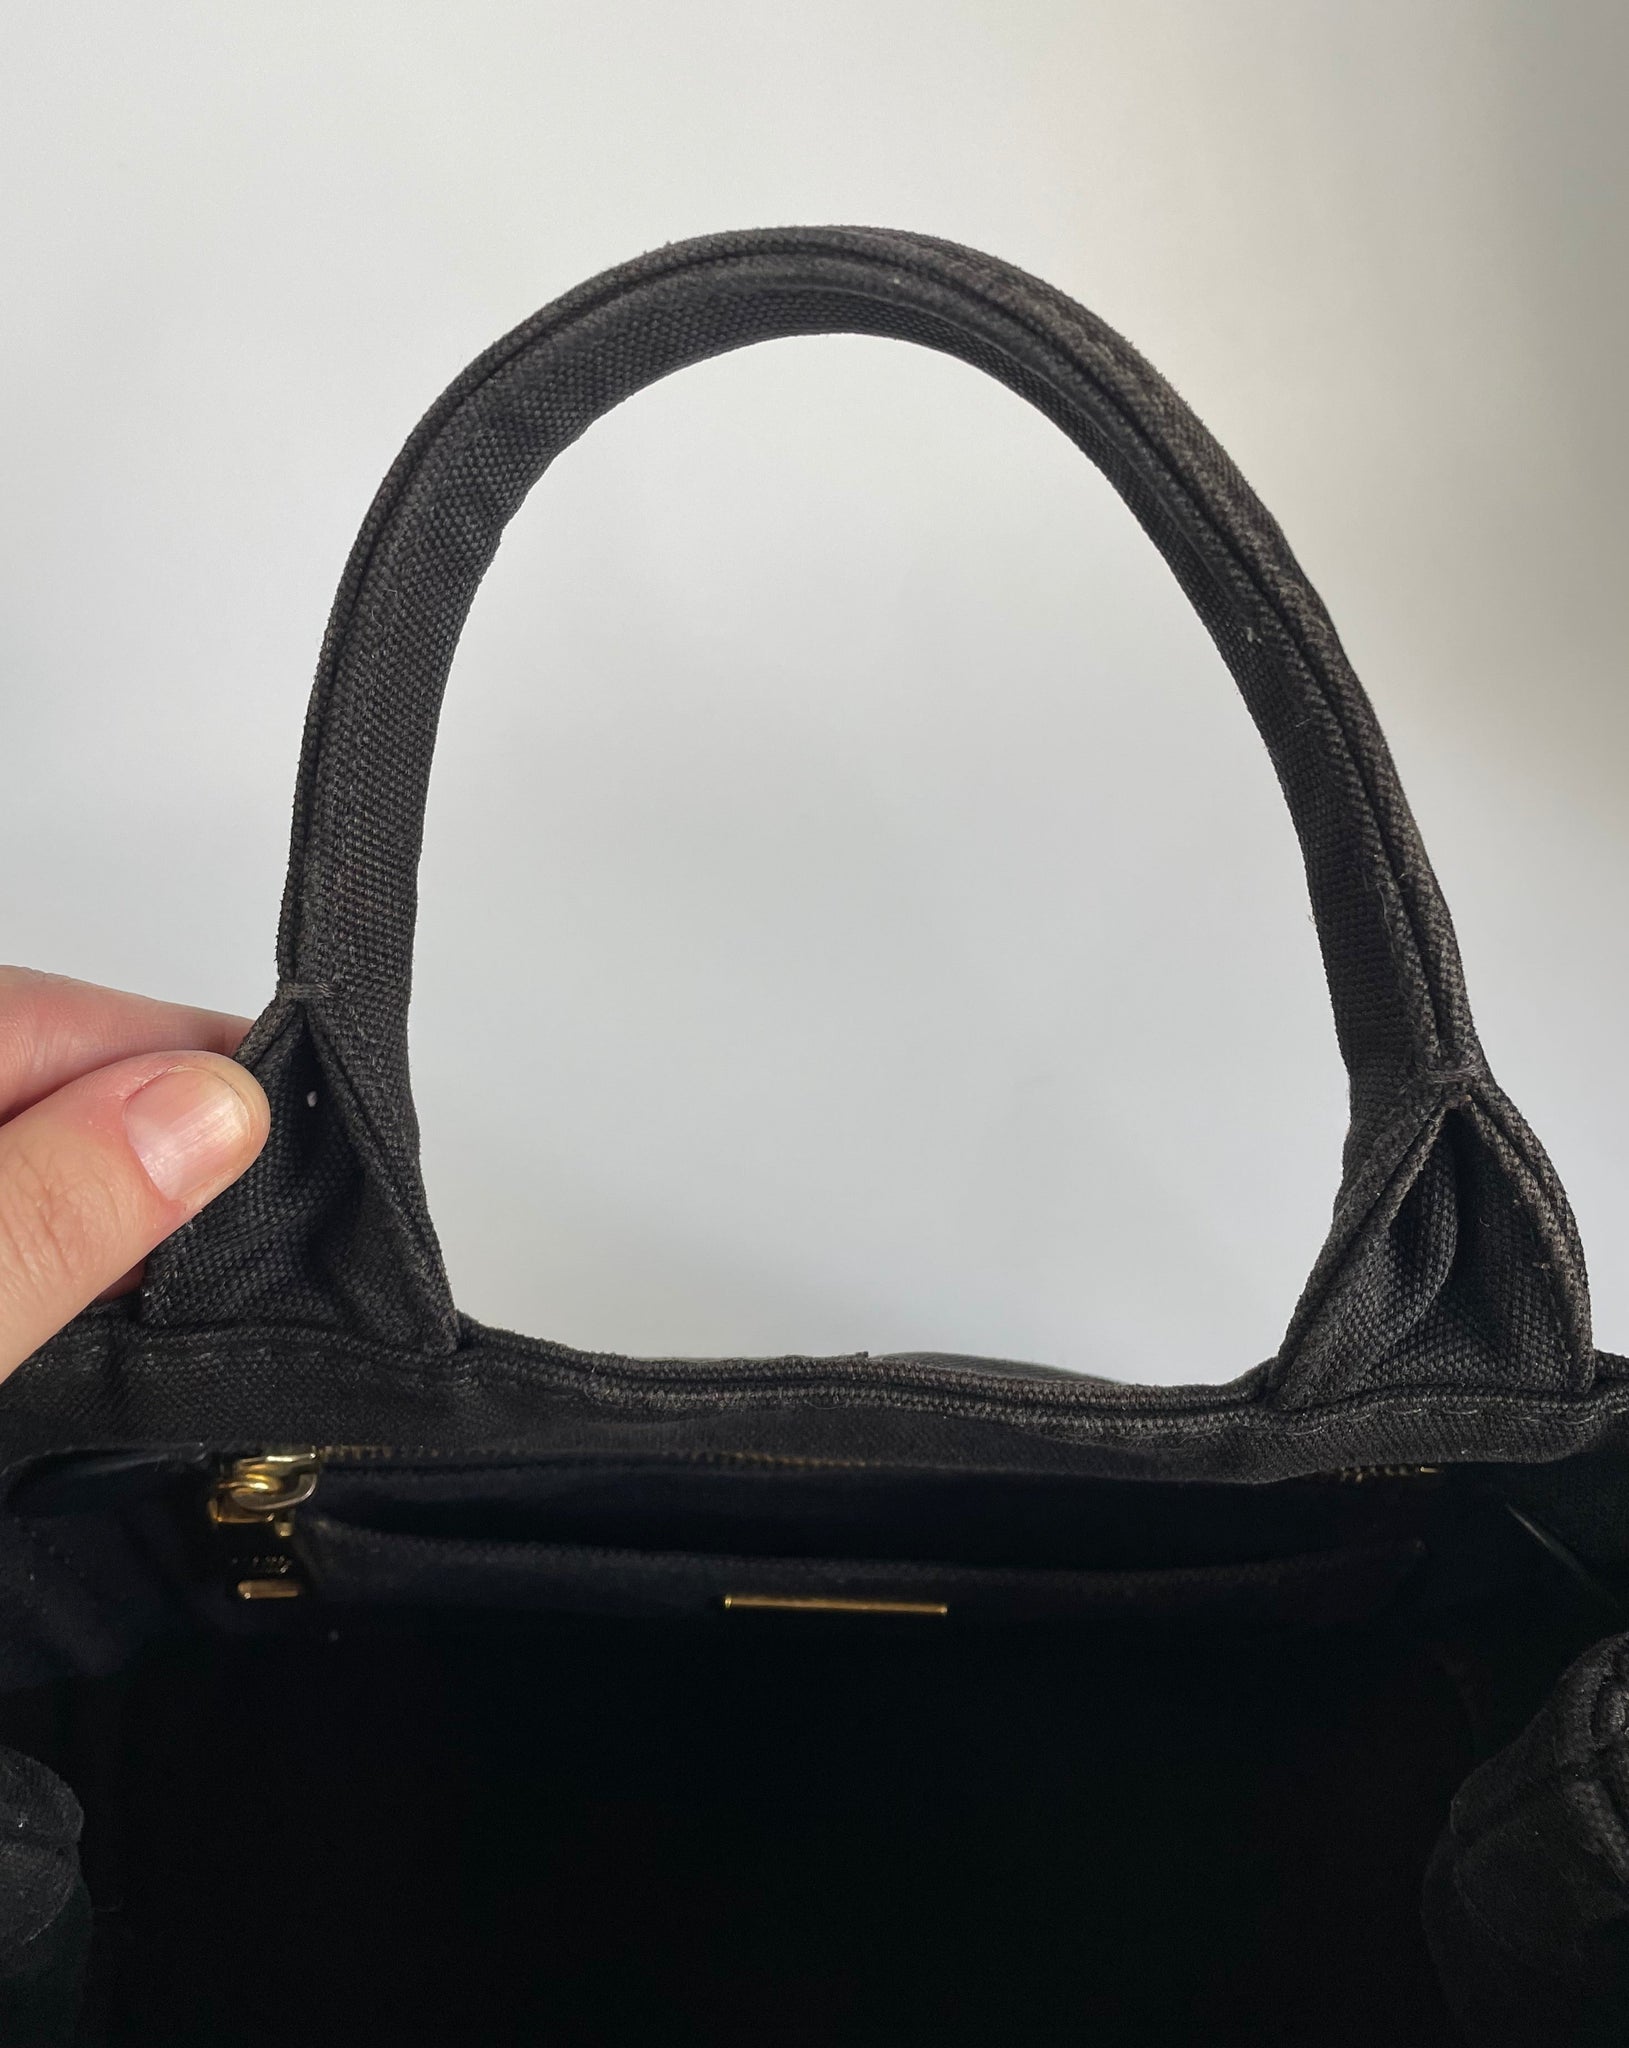 PRADA Plexiglass Canapa Small Shopper Tote Bag Black